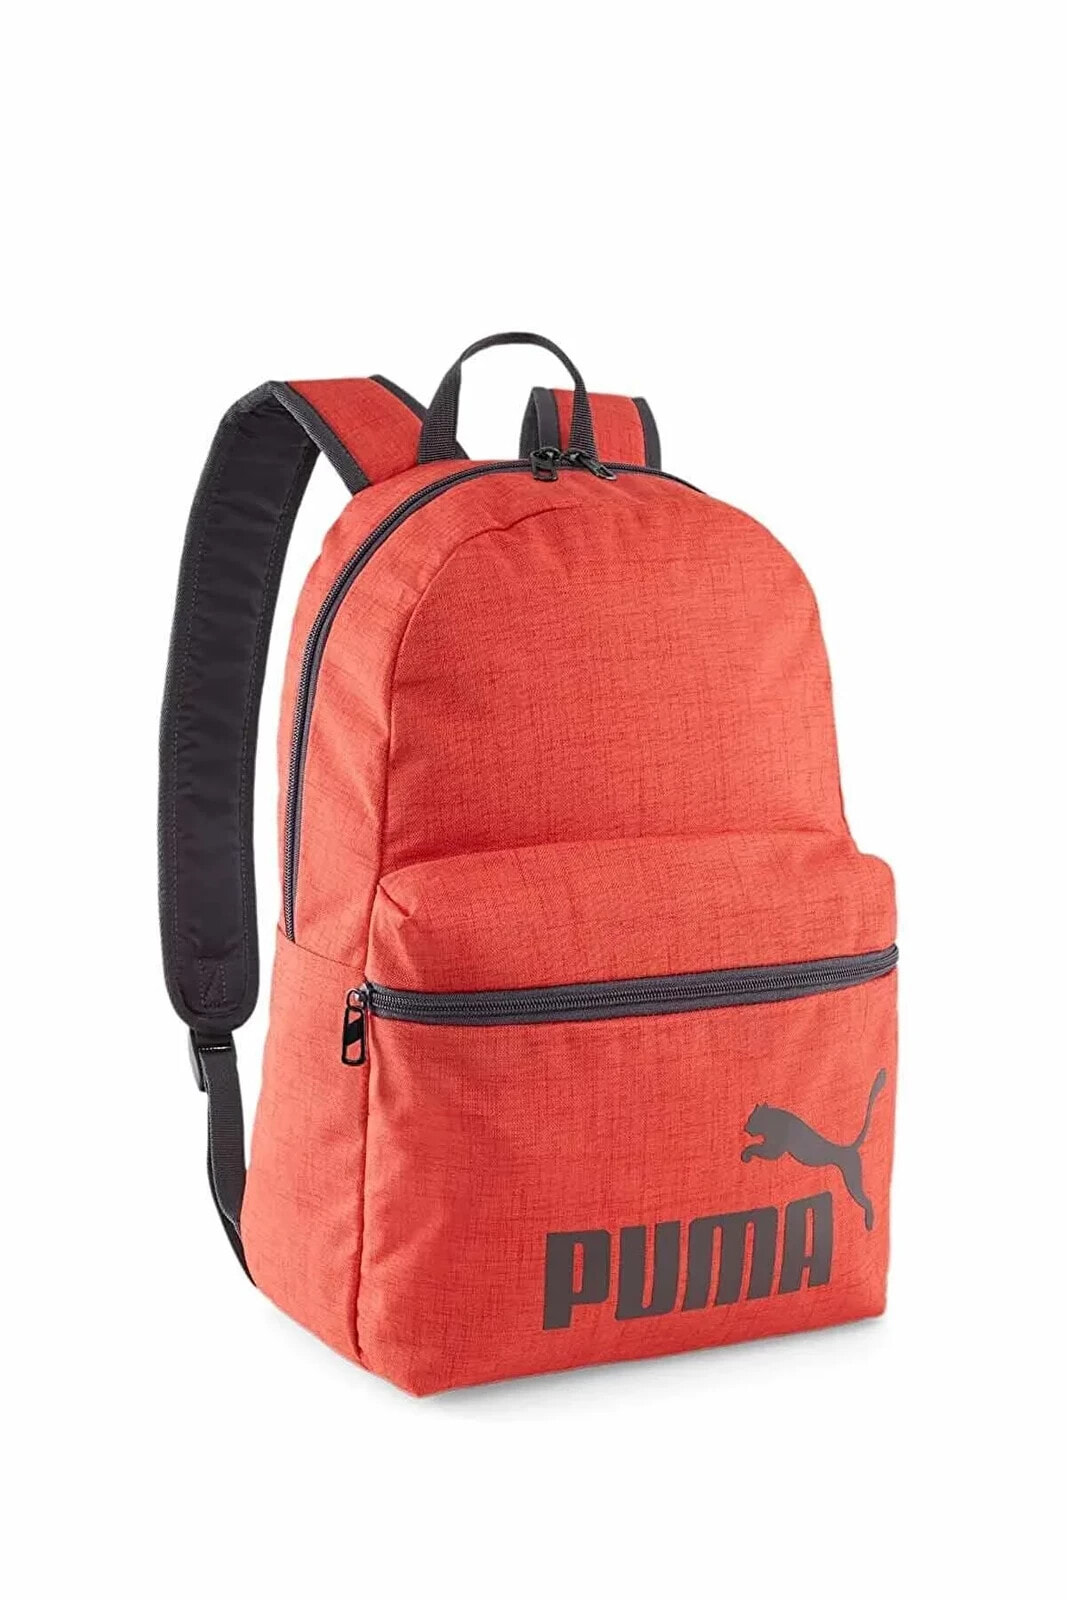 Phase Up Backpack Unisex Sırt Çantası 090118-02 Kiremit